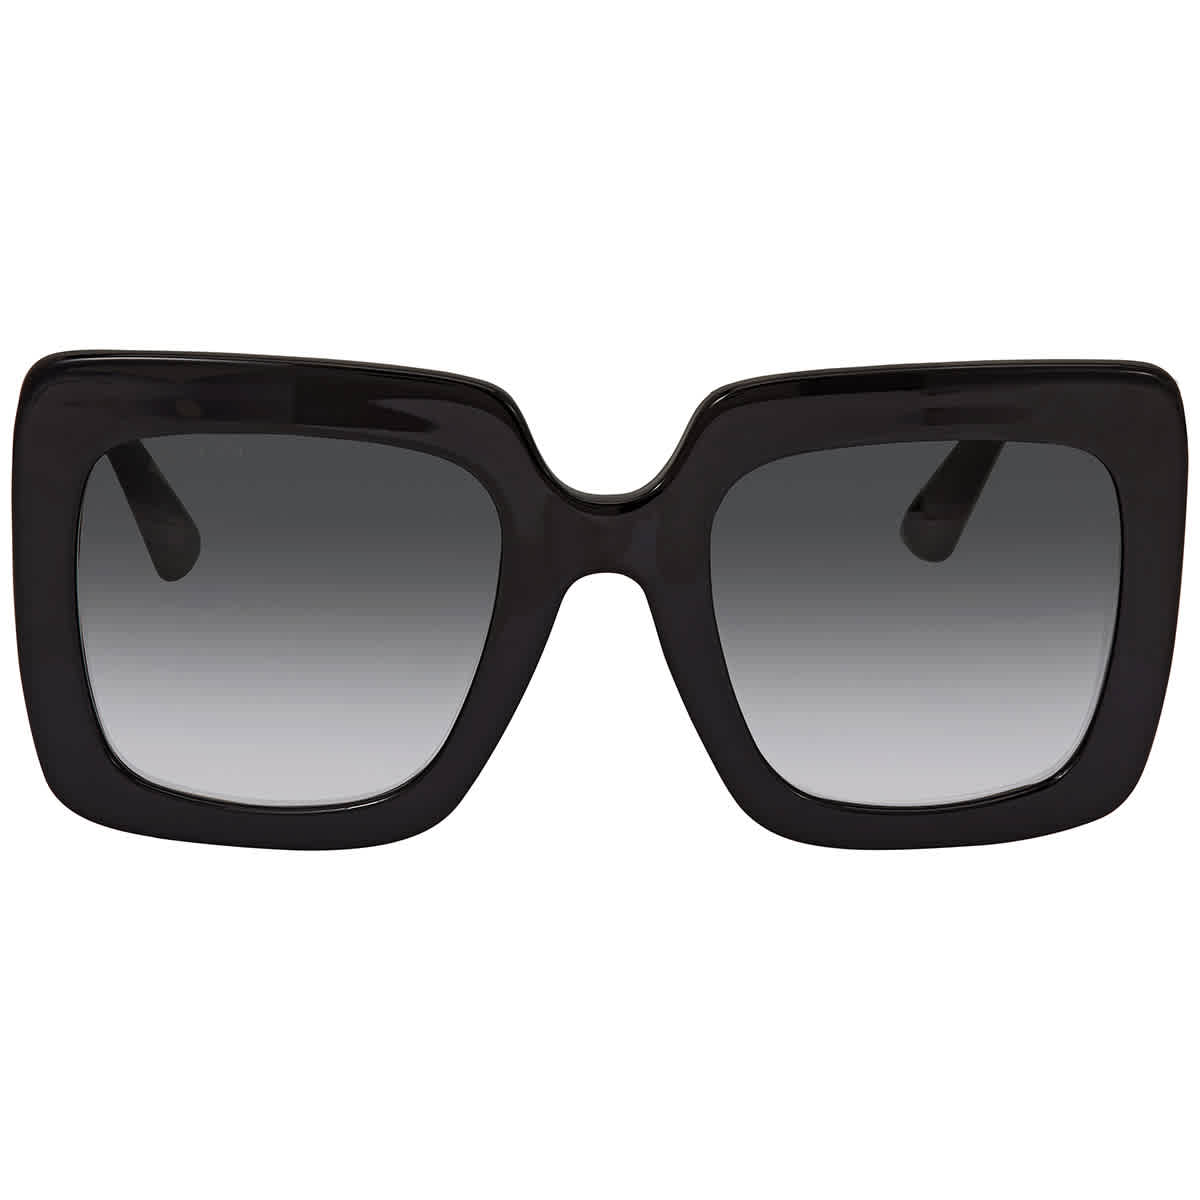 Gucci Grey Gradient Square Ladies Sunglasses GG0328S 001 53 - image 2 of 2